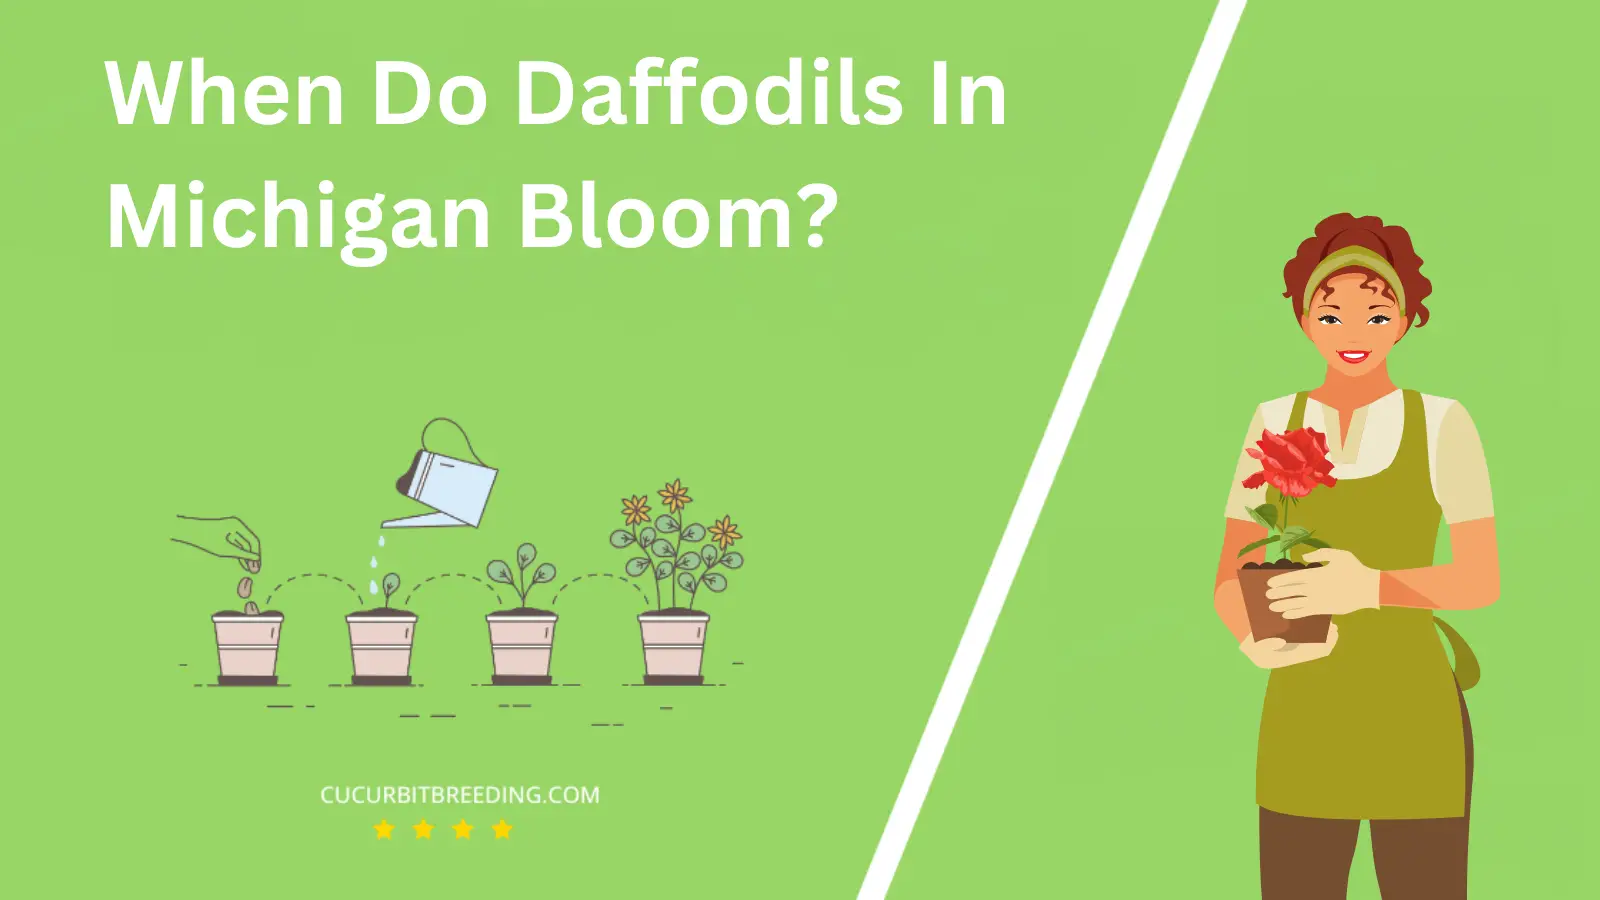 When Do Daffodils In Michigan Bloom?